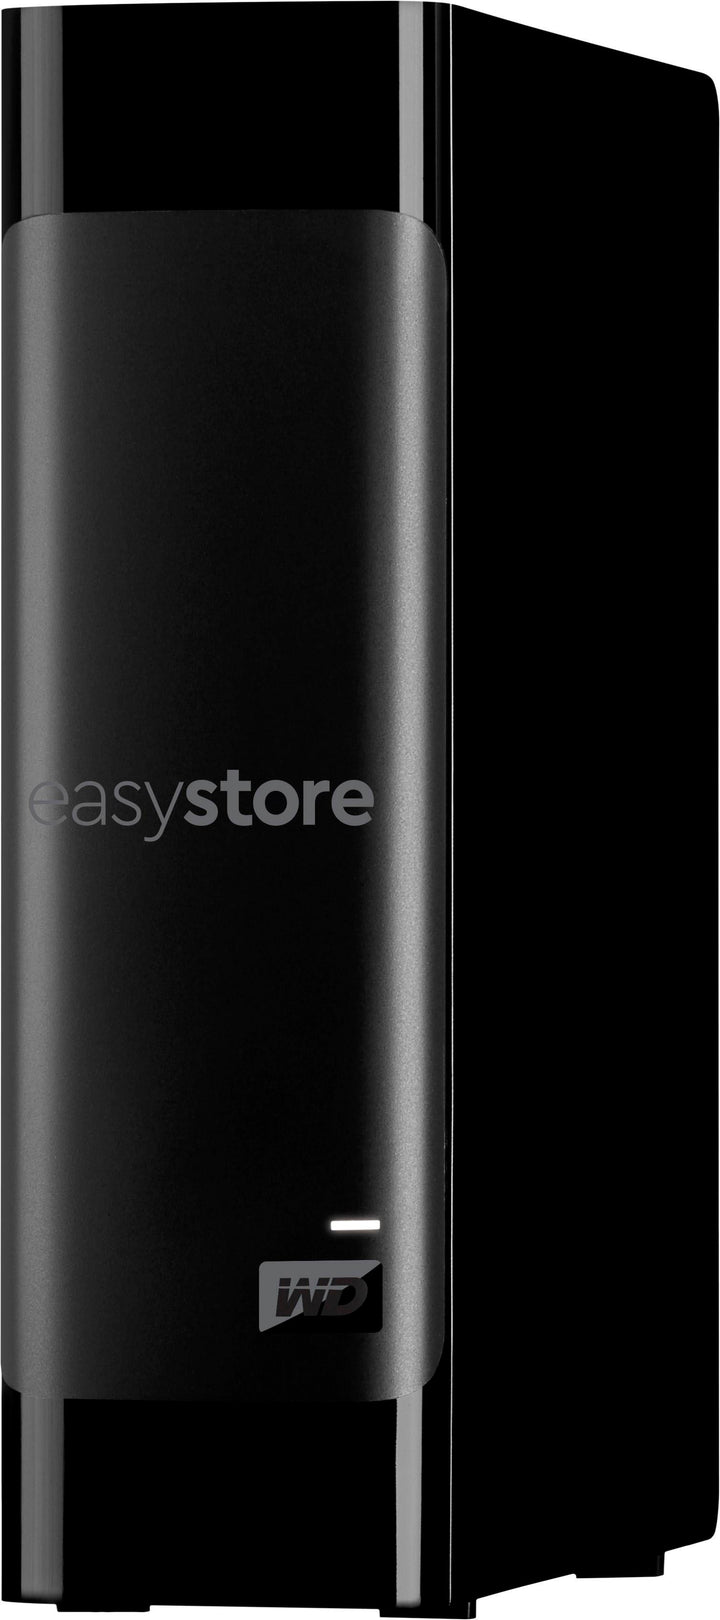 WD - easystore 18TB External USB 3.0 Hard Drive - Black_1